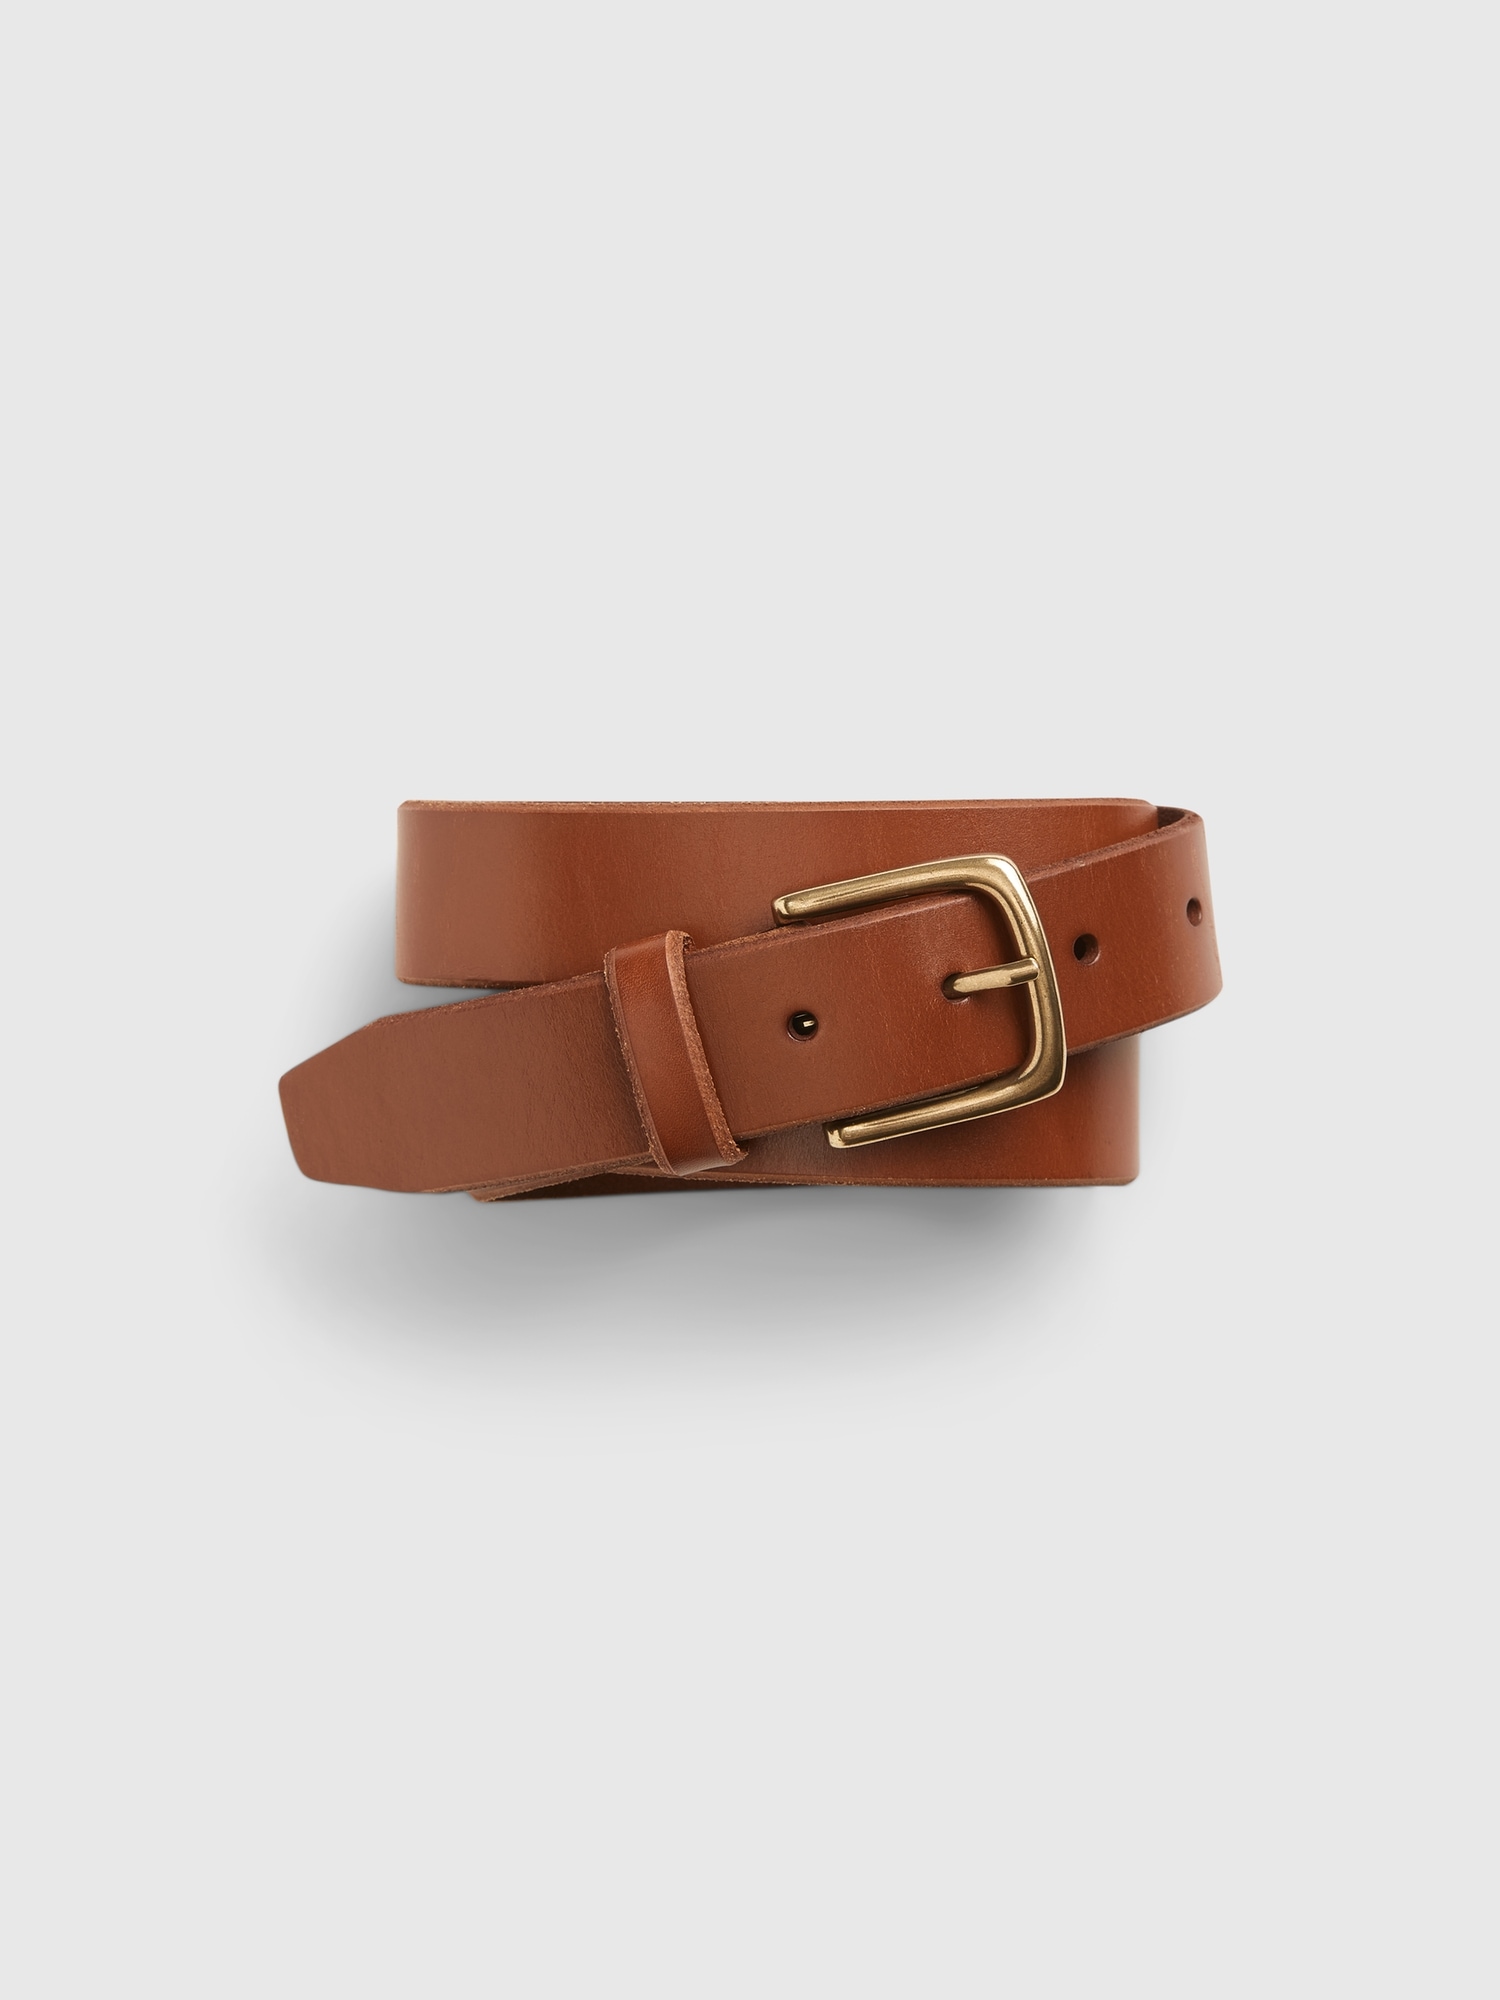 Gap Leather Belt In Brown Cognac